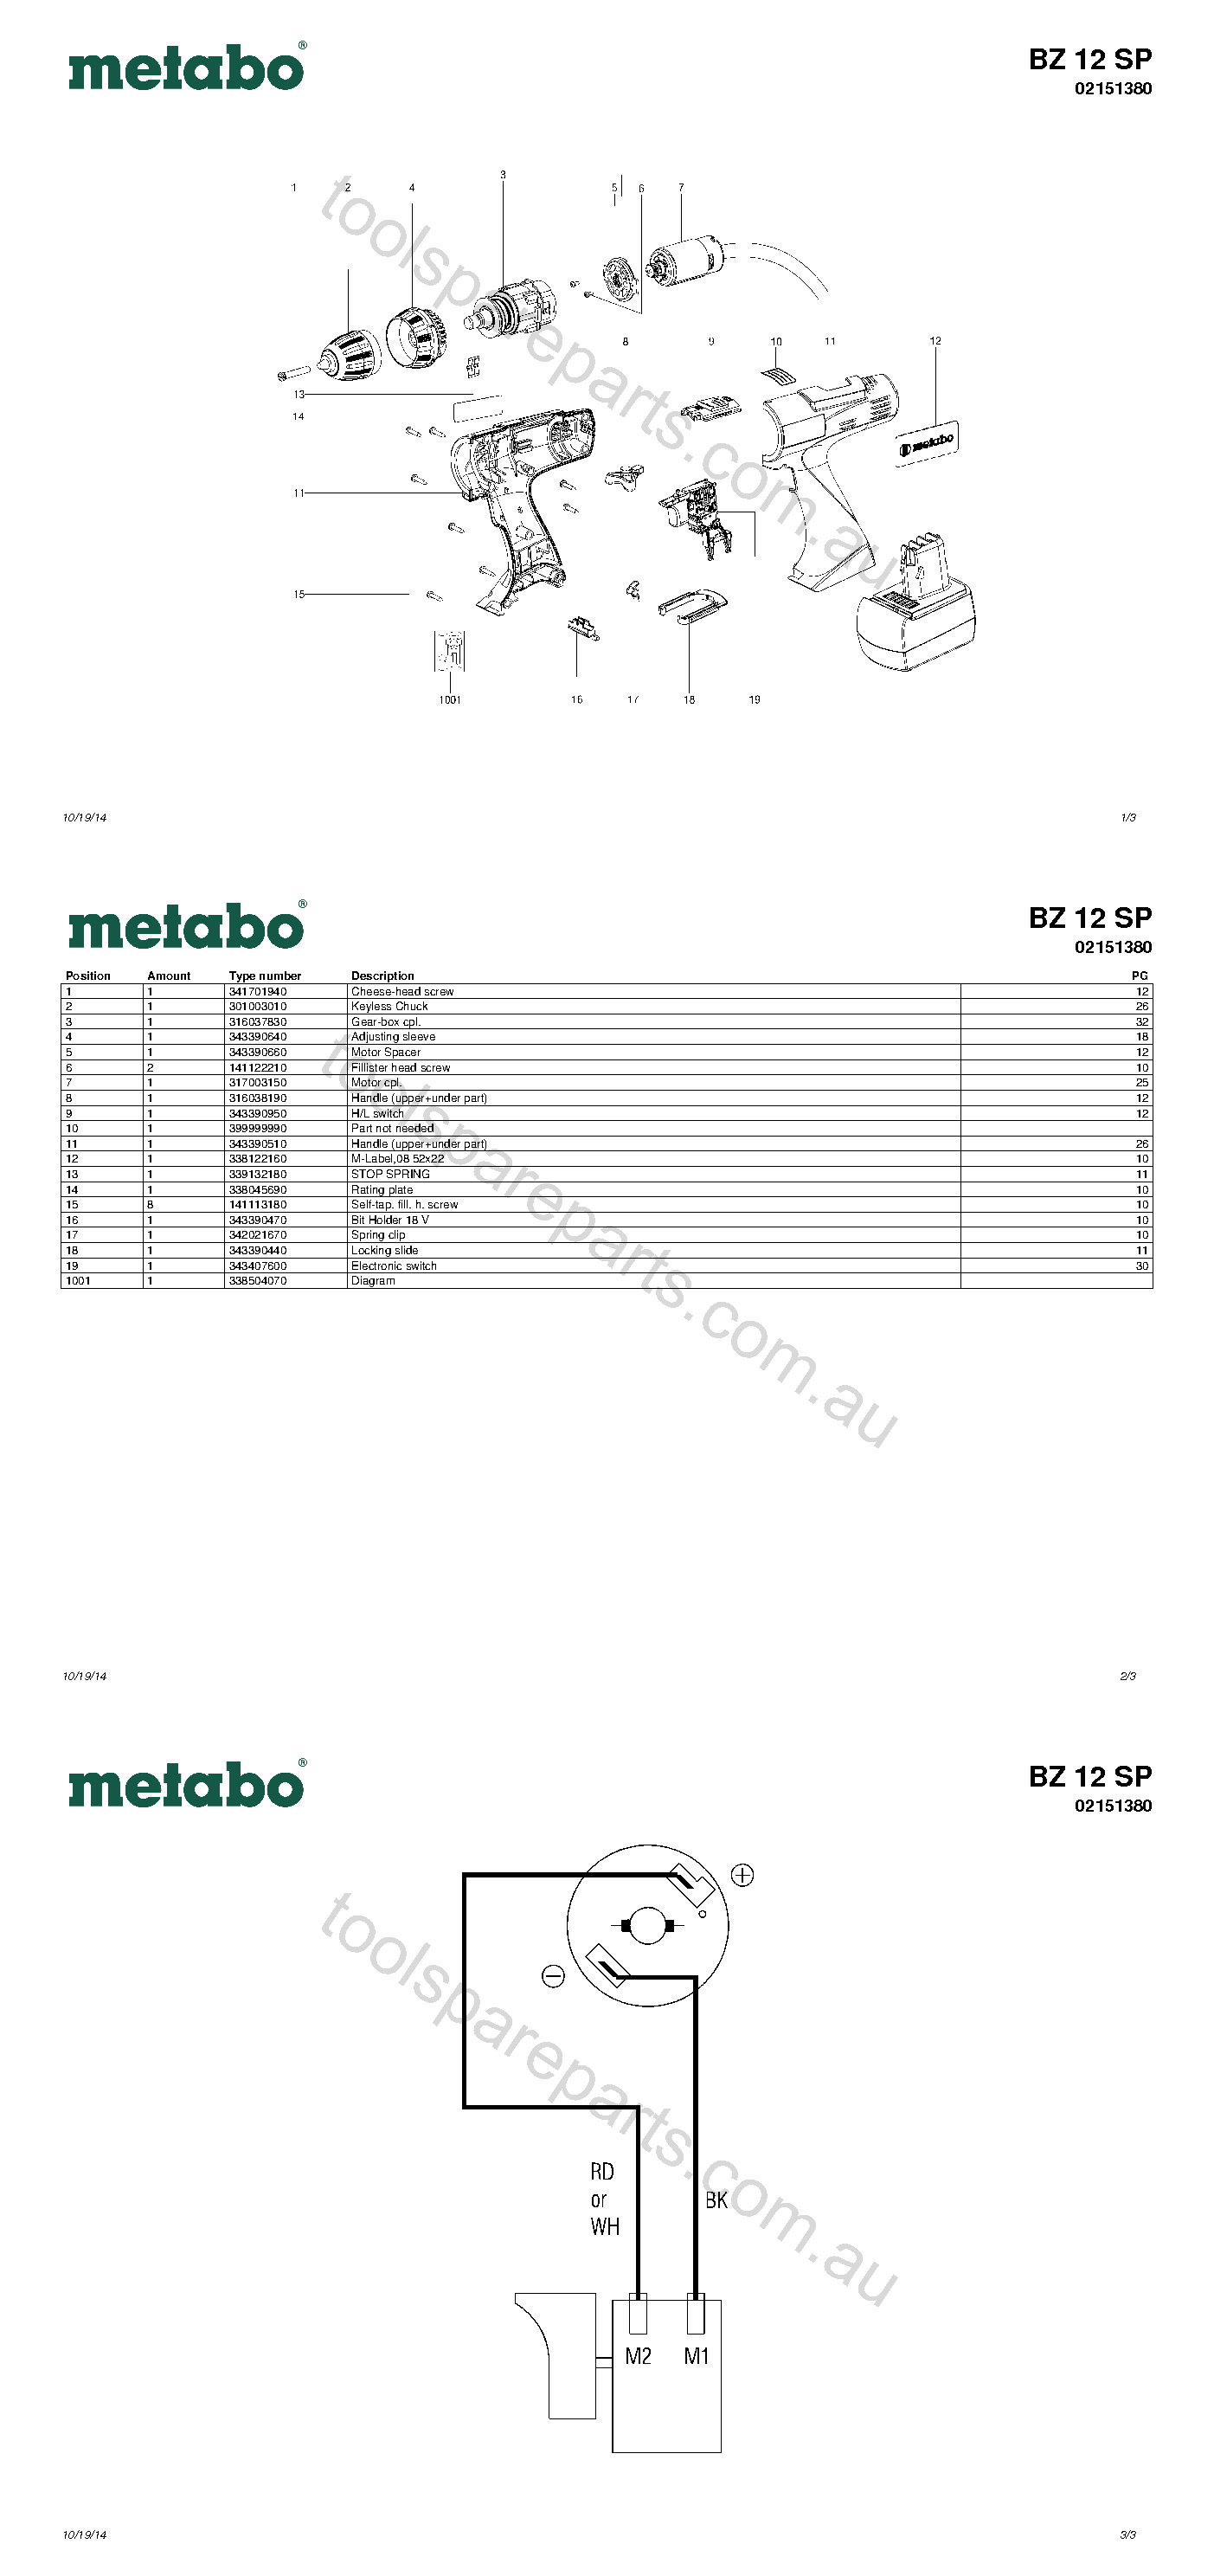 Metabo BZ 12 SP 02151380  Diagram 1